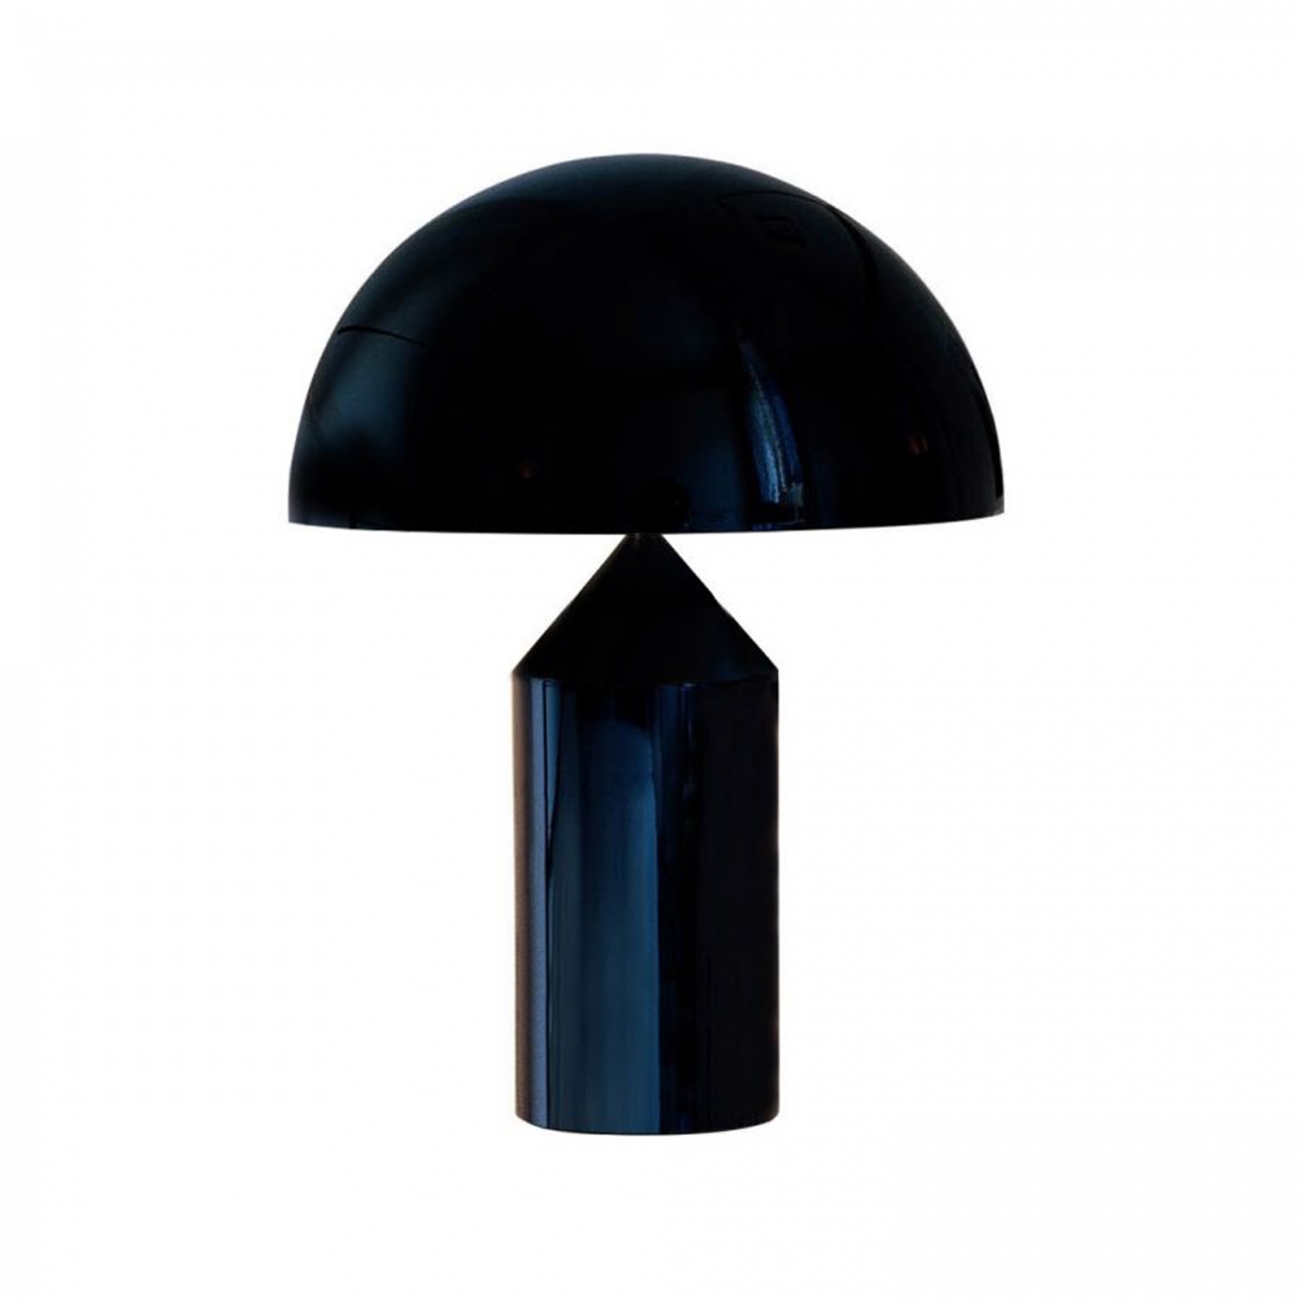 OLuce Atollo 239 Table Lamp